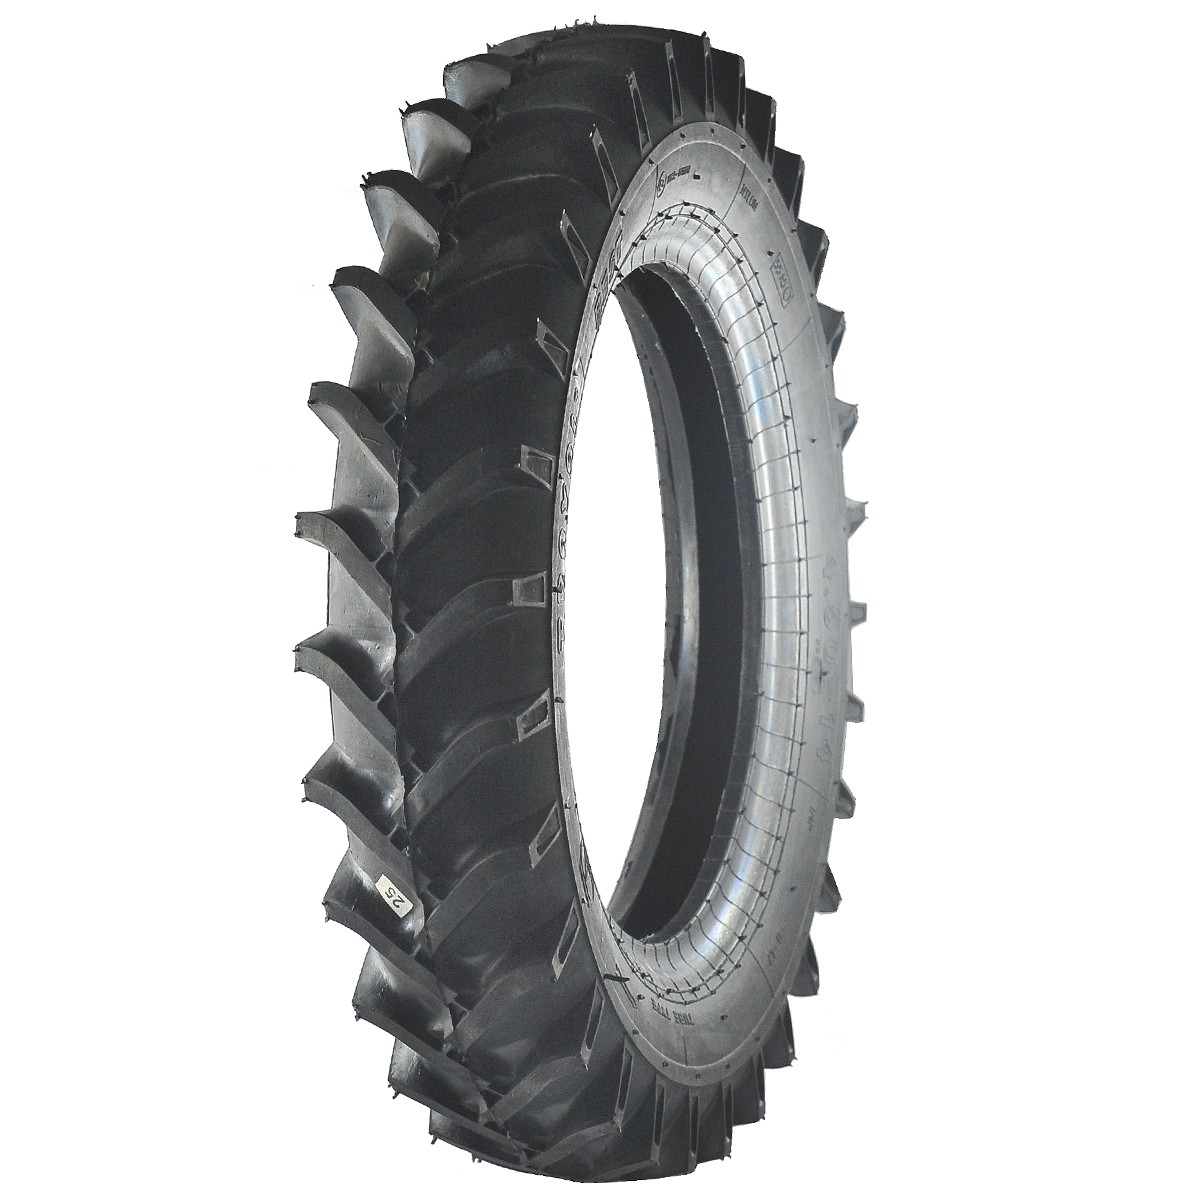 Agricultural tire 4.50-14 / 4PR / D-47 / TT / Trayal